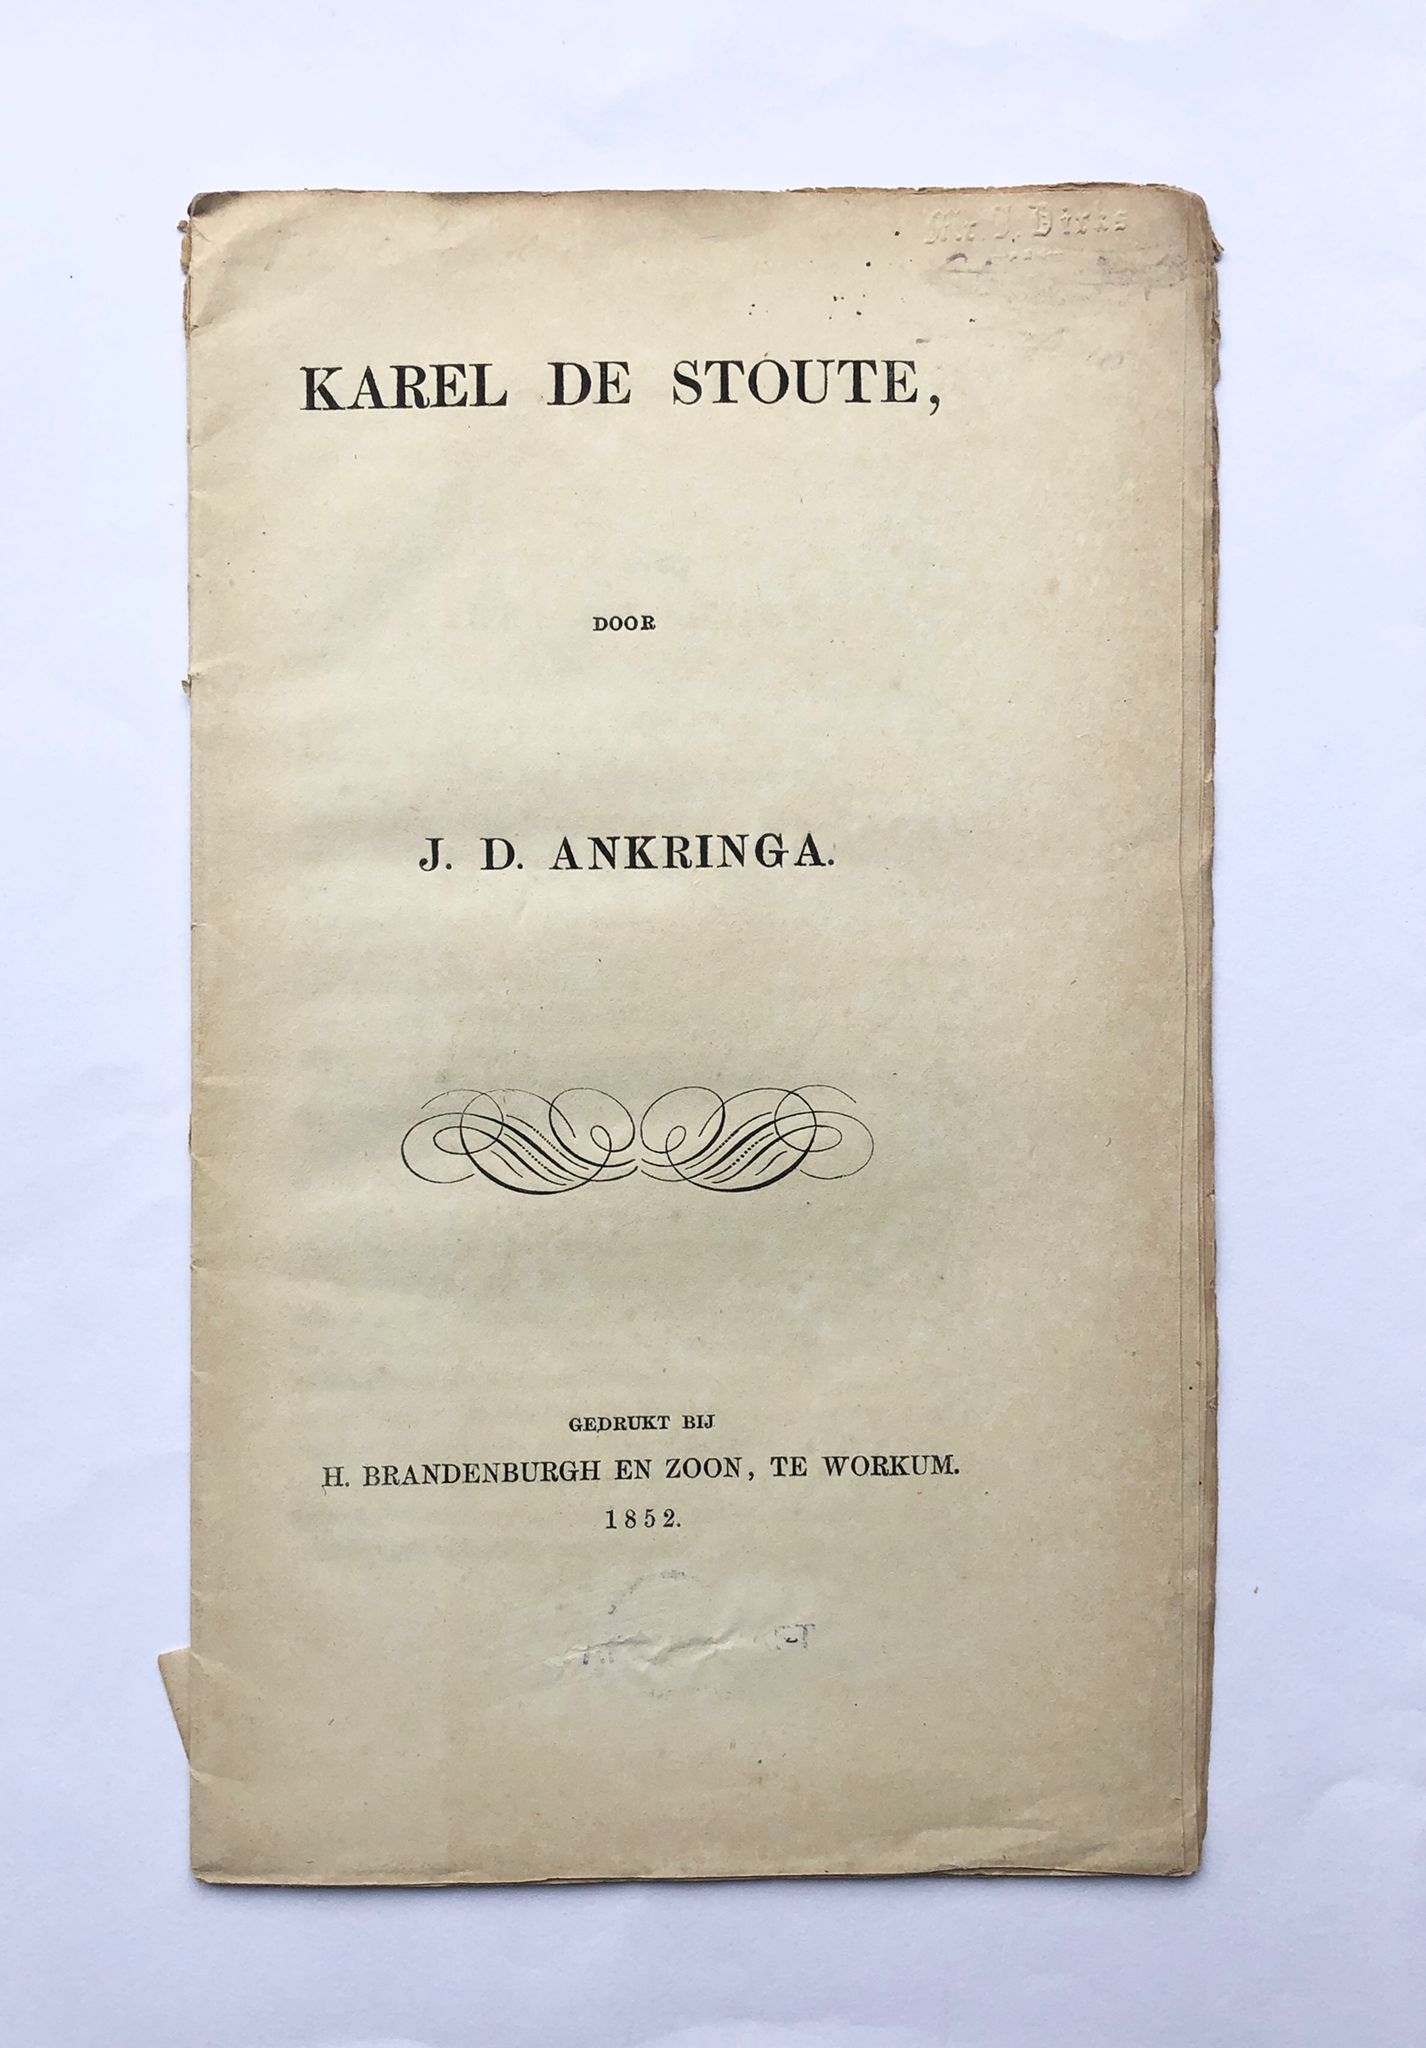 [Friesland, Workum] Karel de Stoute, H. Bandenburgh en Zoon, te Workum, Friesland, 1852, 17 pp.